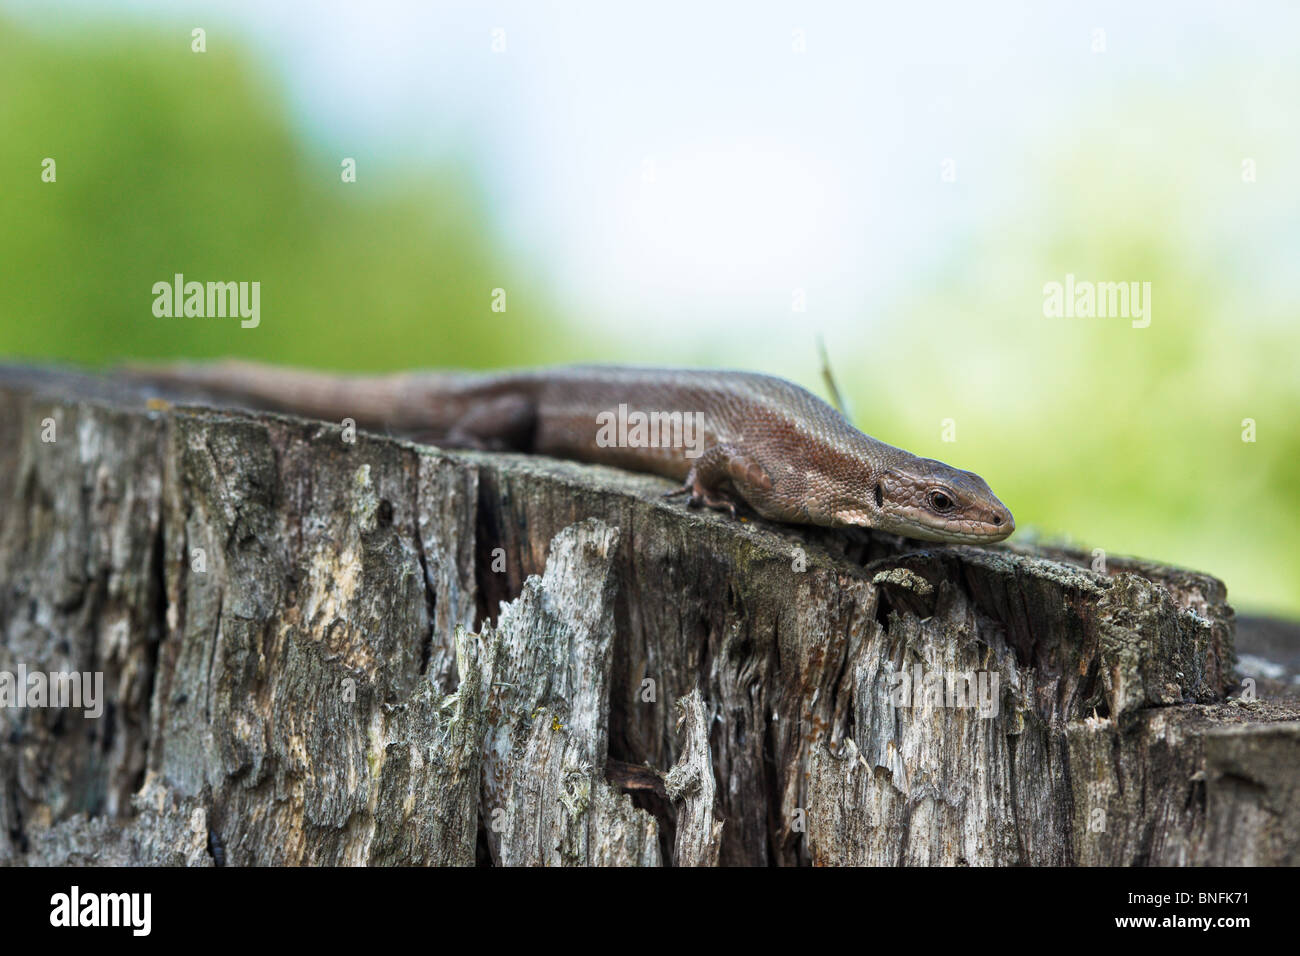 Viviparous lizard (Lacerta vivipara). The lizard is on a tree stub. Stock Photo